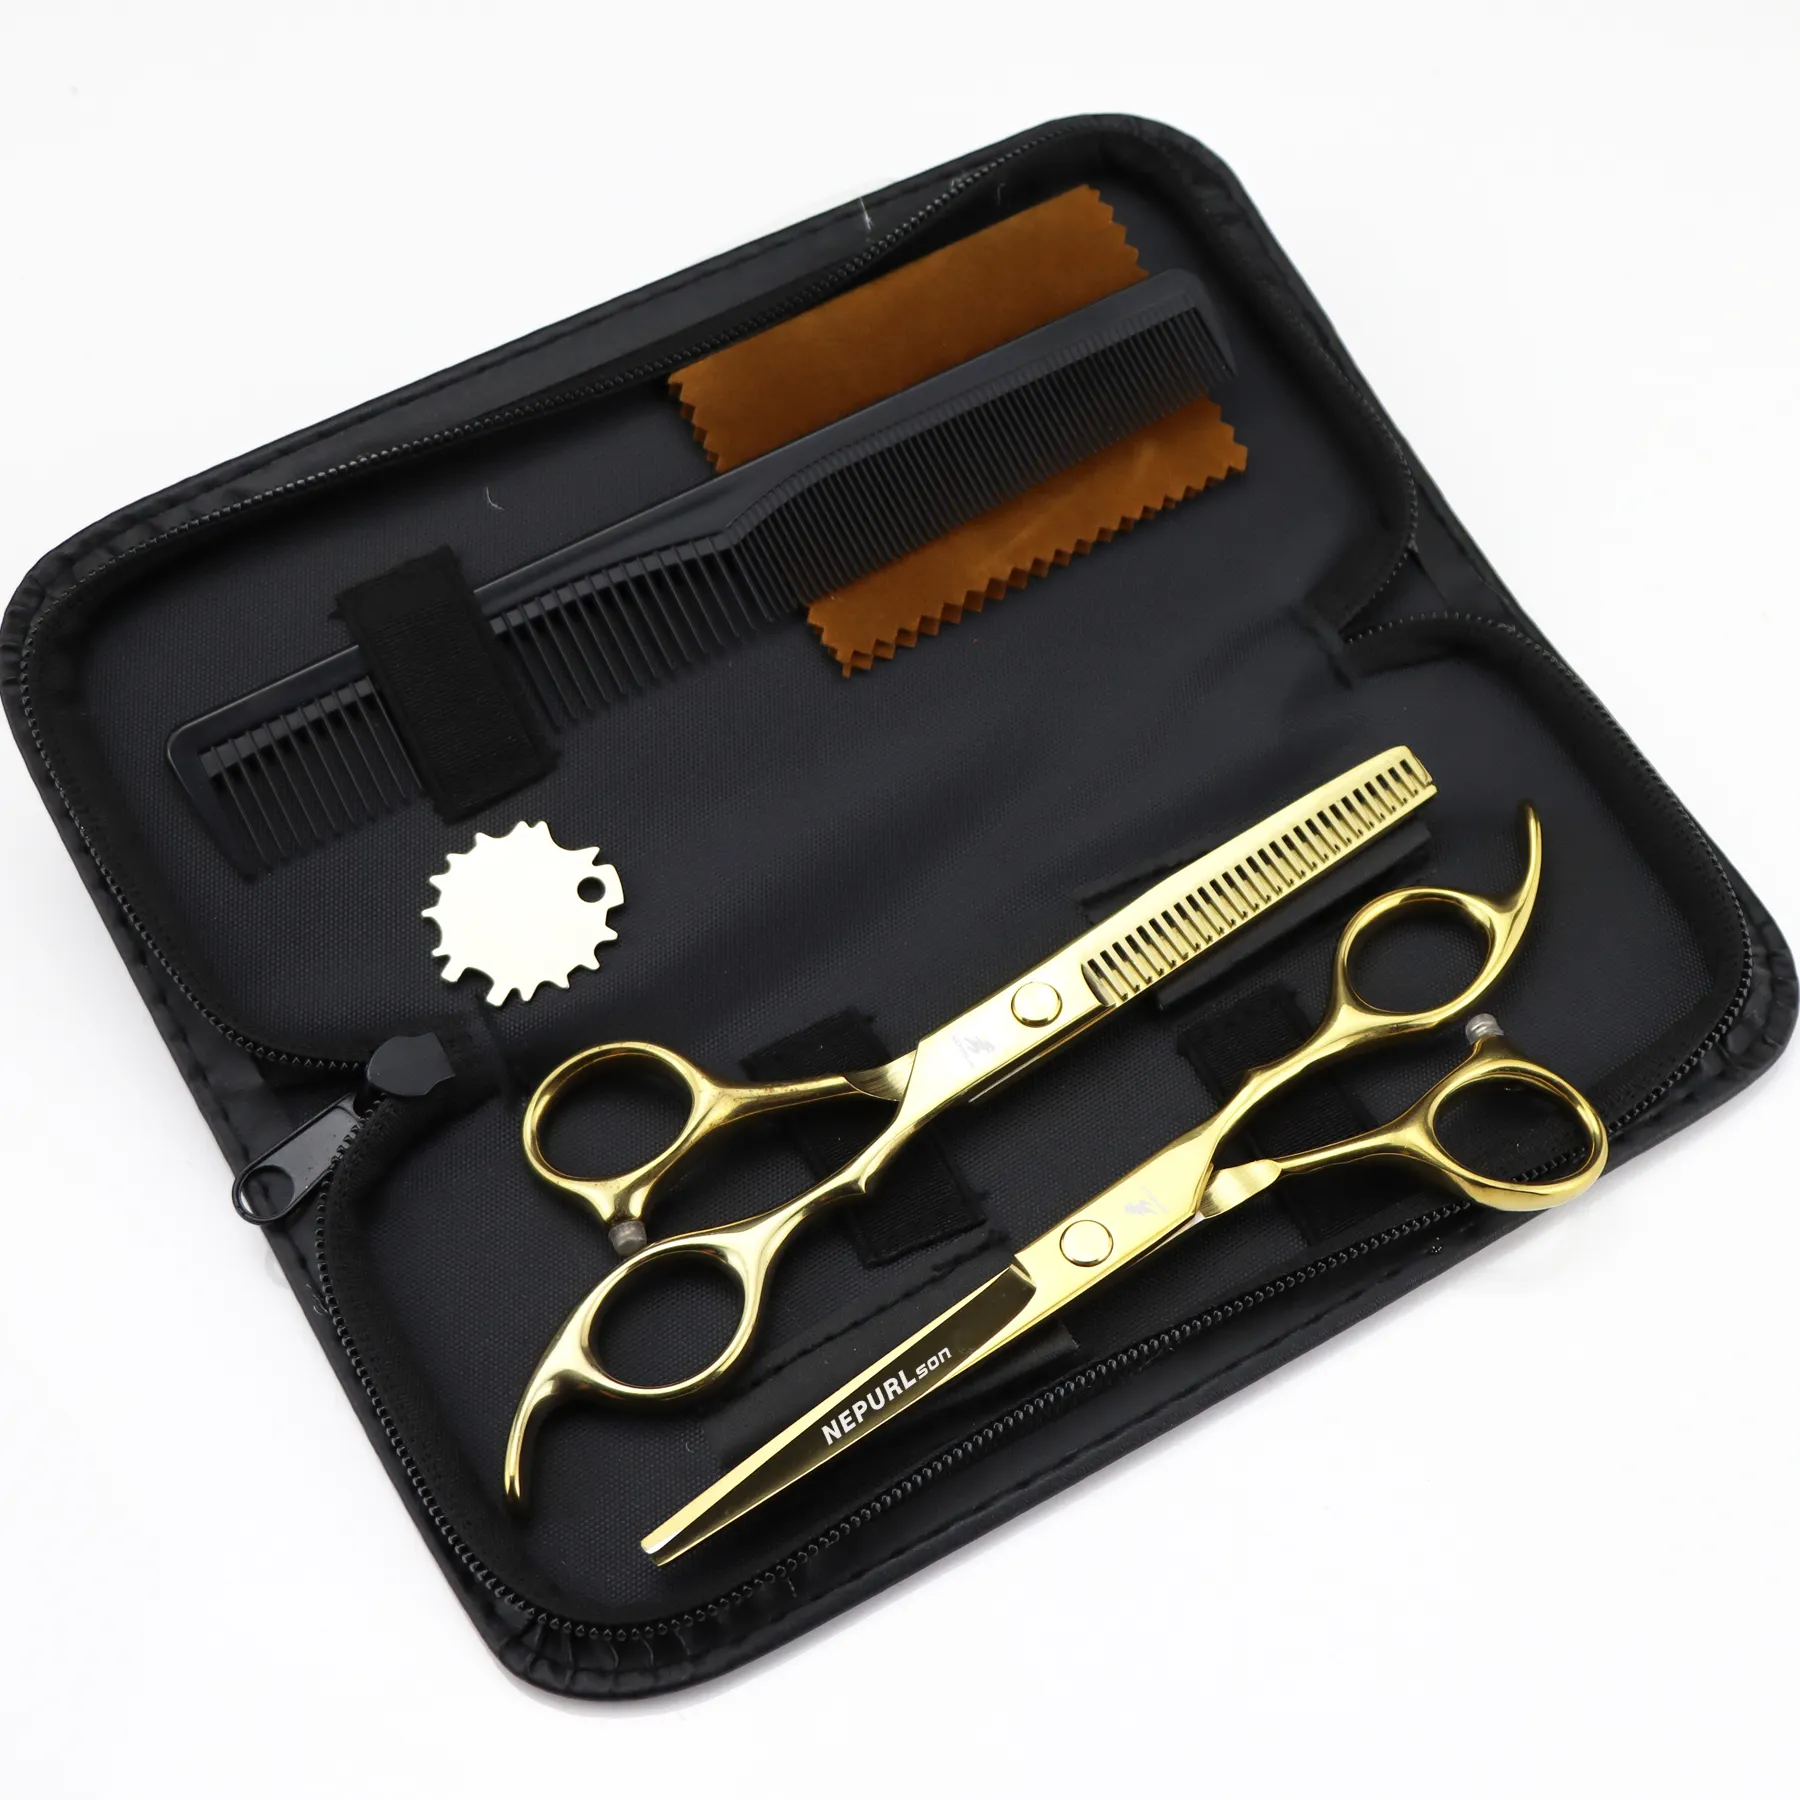 Gunting diskon ringan Set LG 01 6.0 inci, Set profesional gunting penata rambut, Kit pemotong rambut